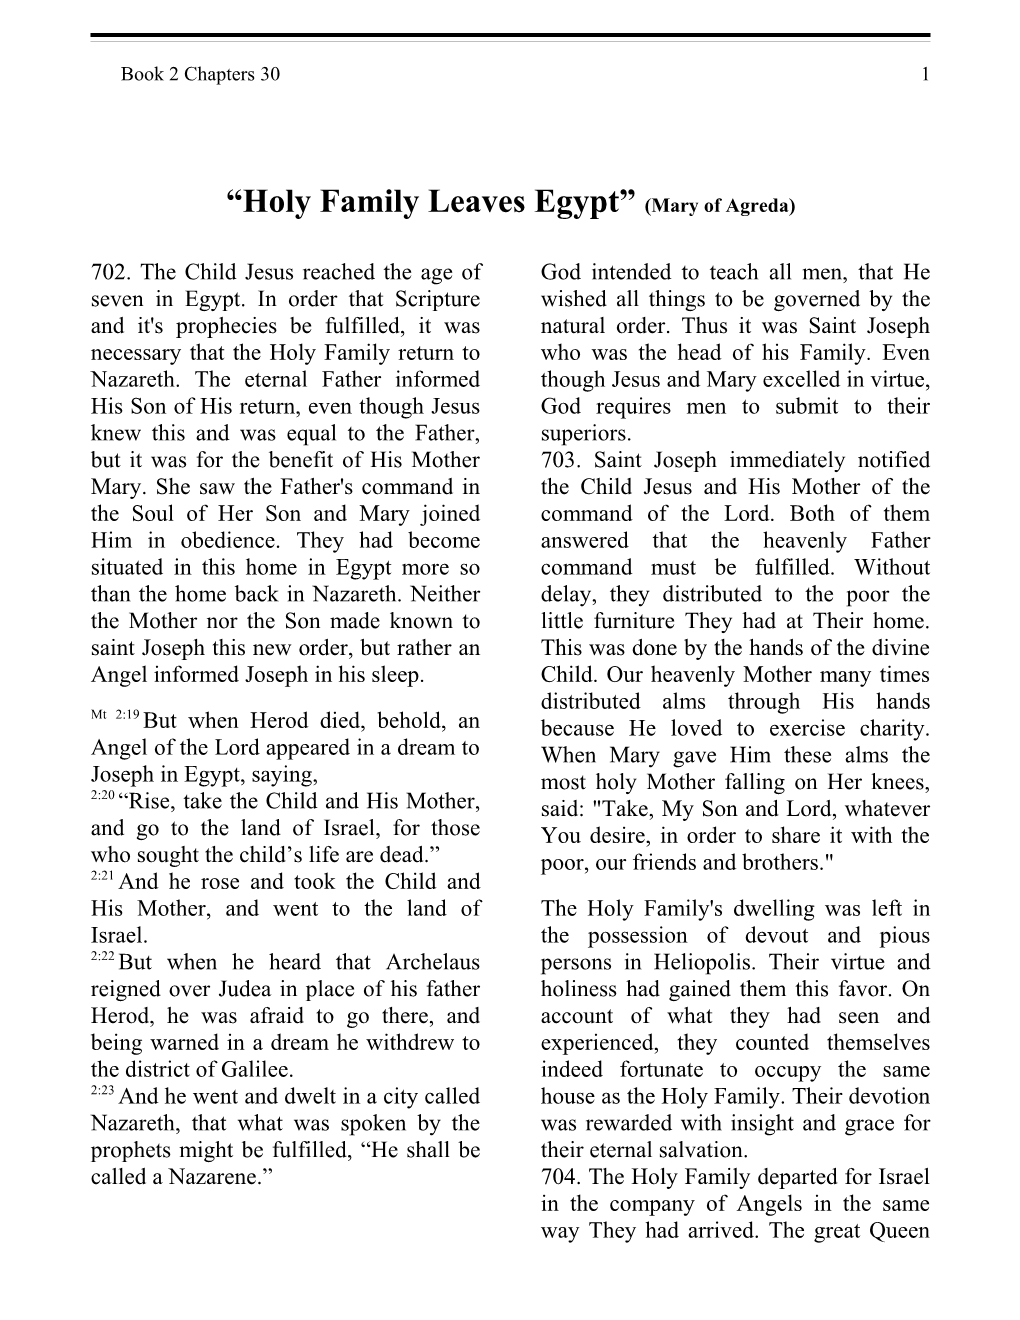 Holy Family Leaves Egypt (Mary of Agreda)